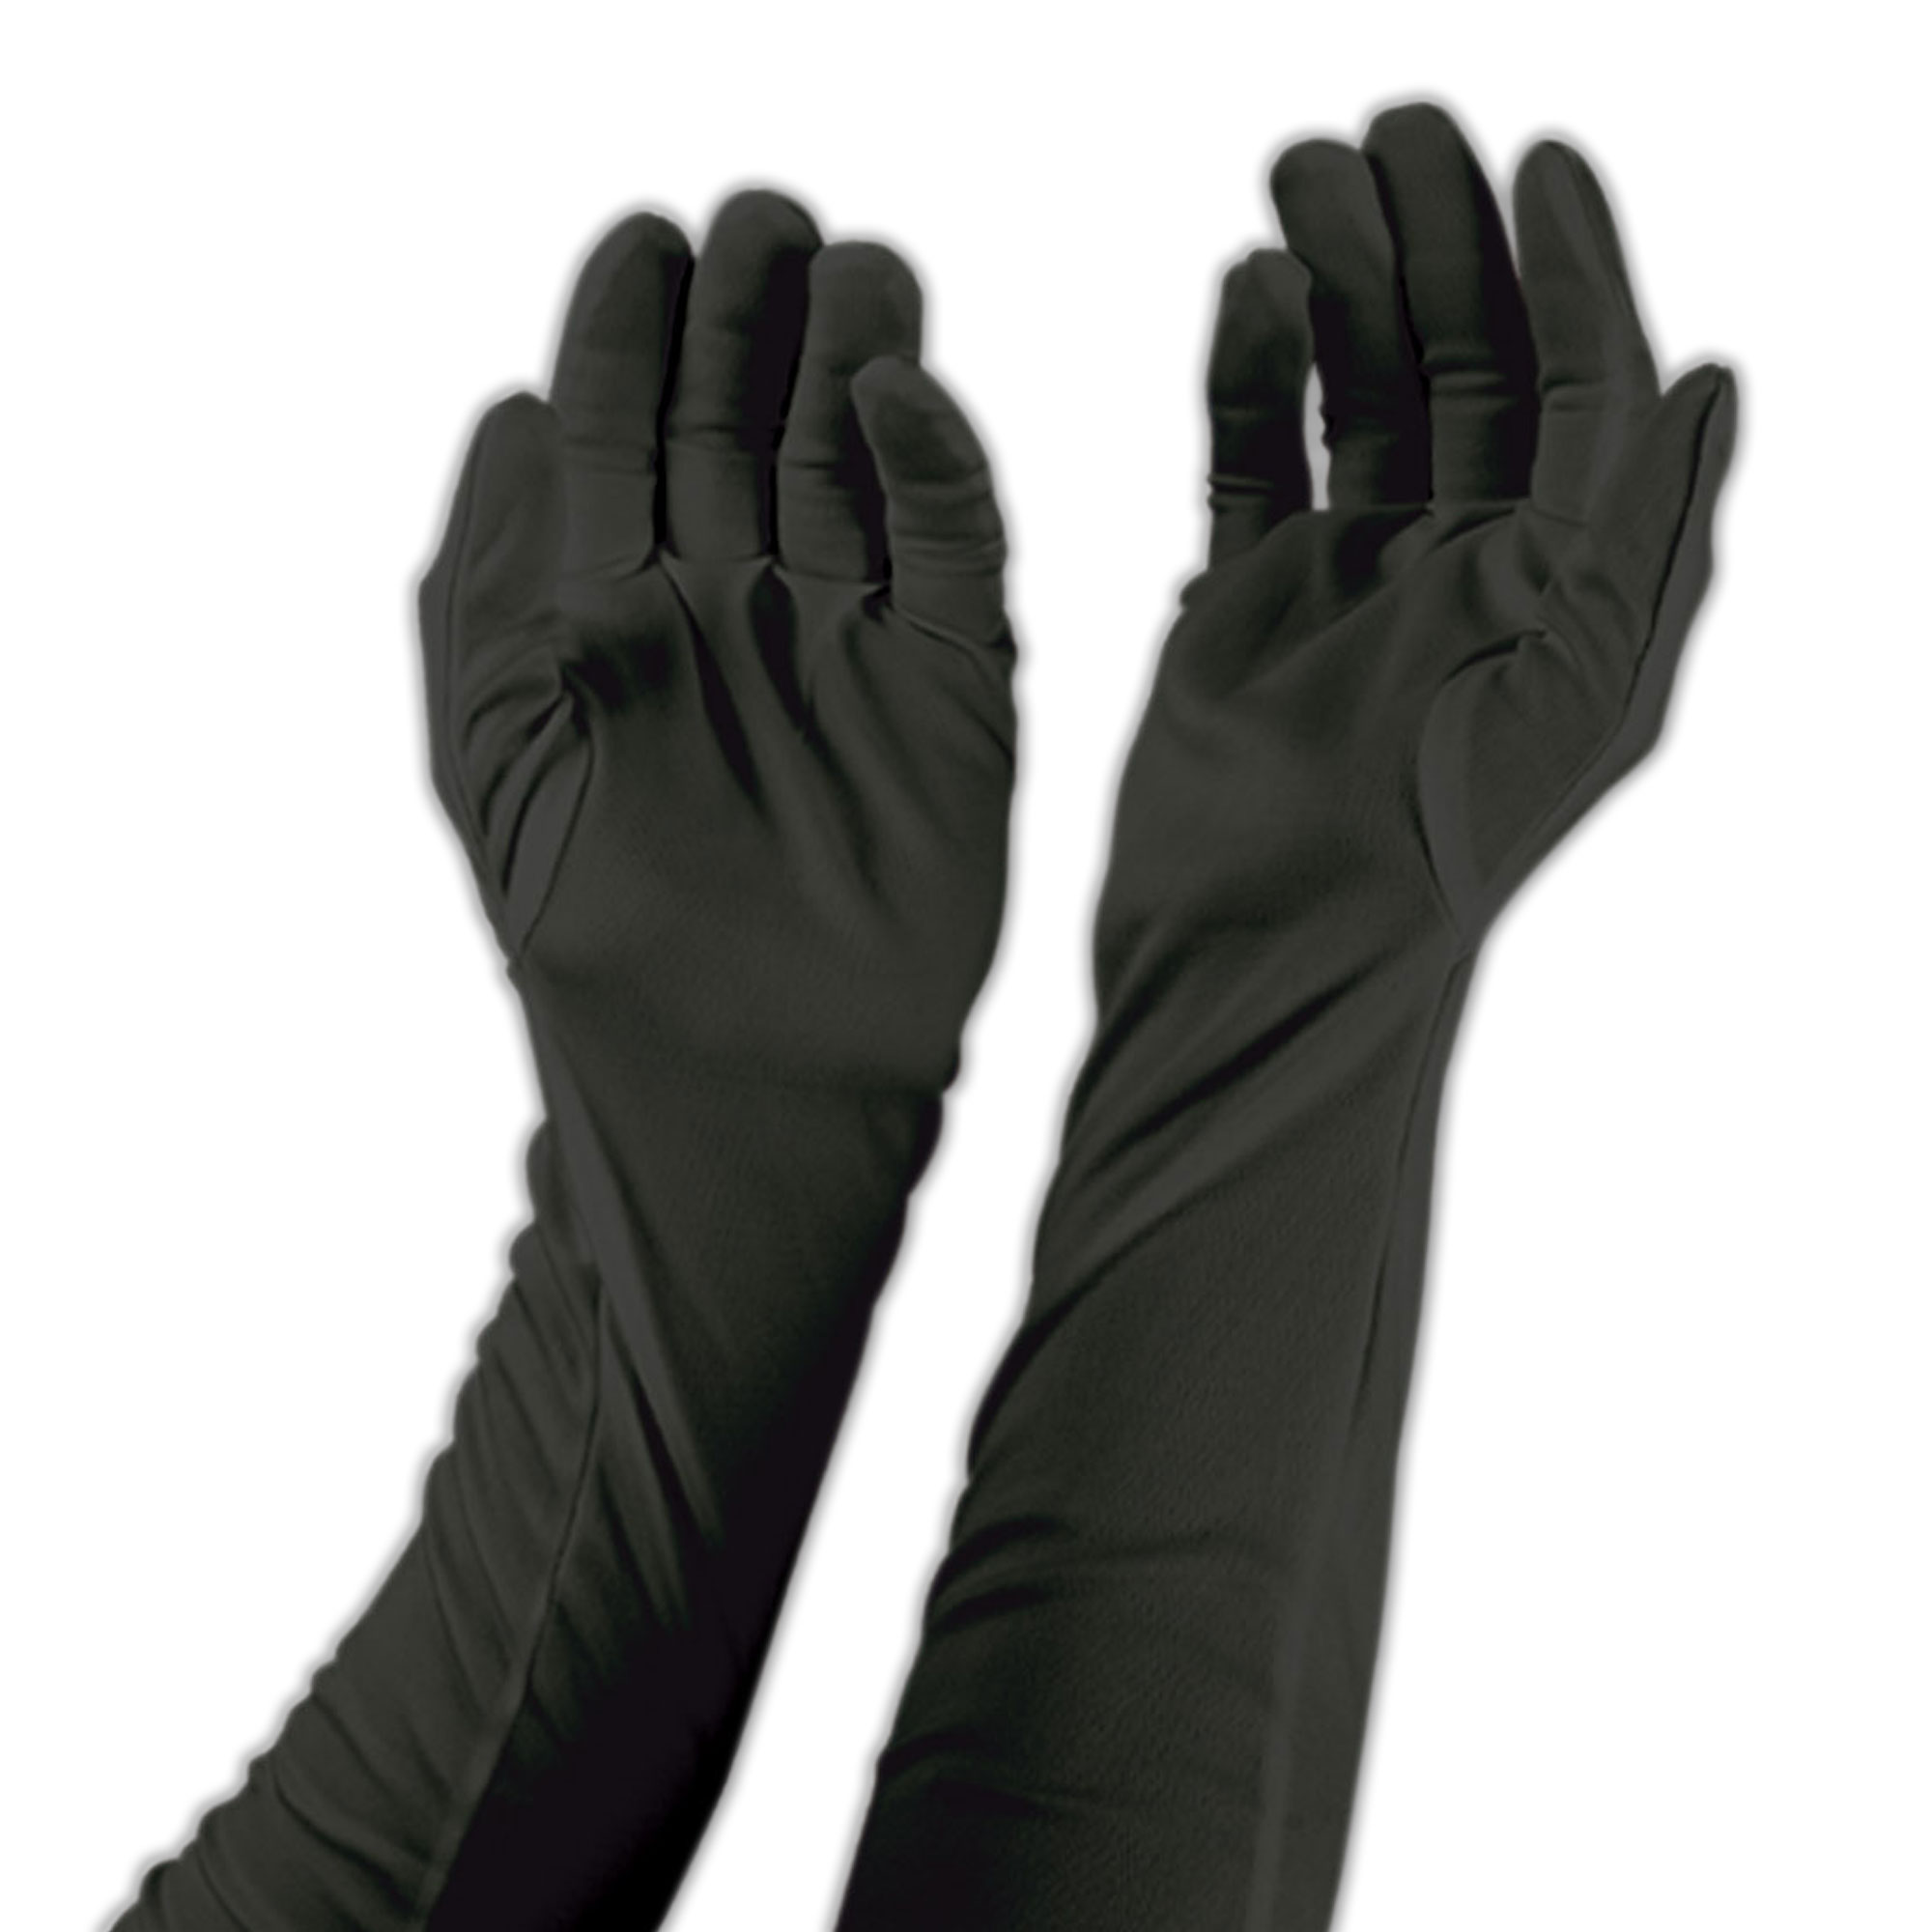 Black Elbow Gloves by Windy City Novelties